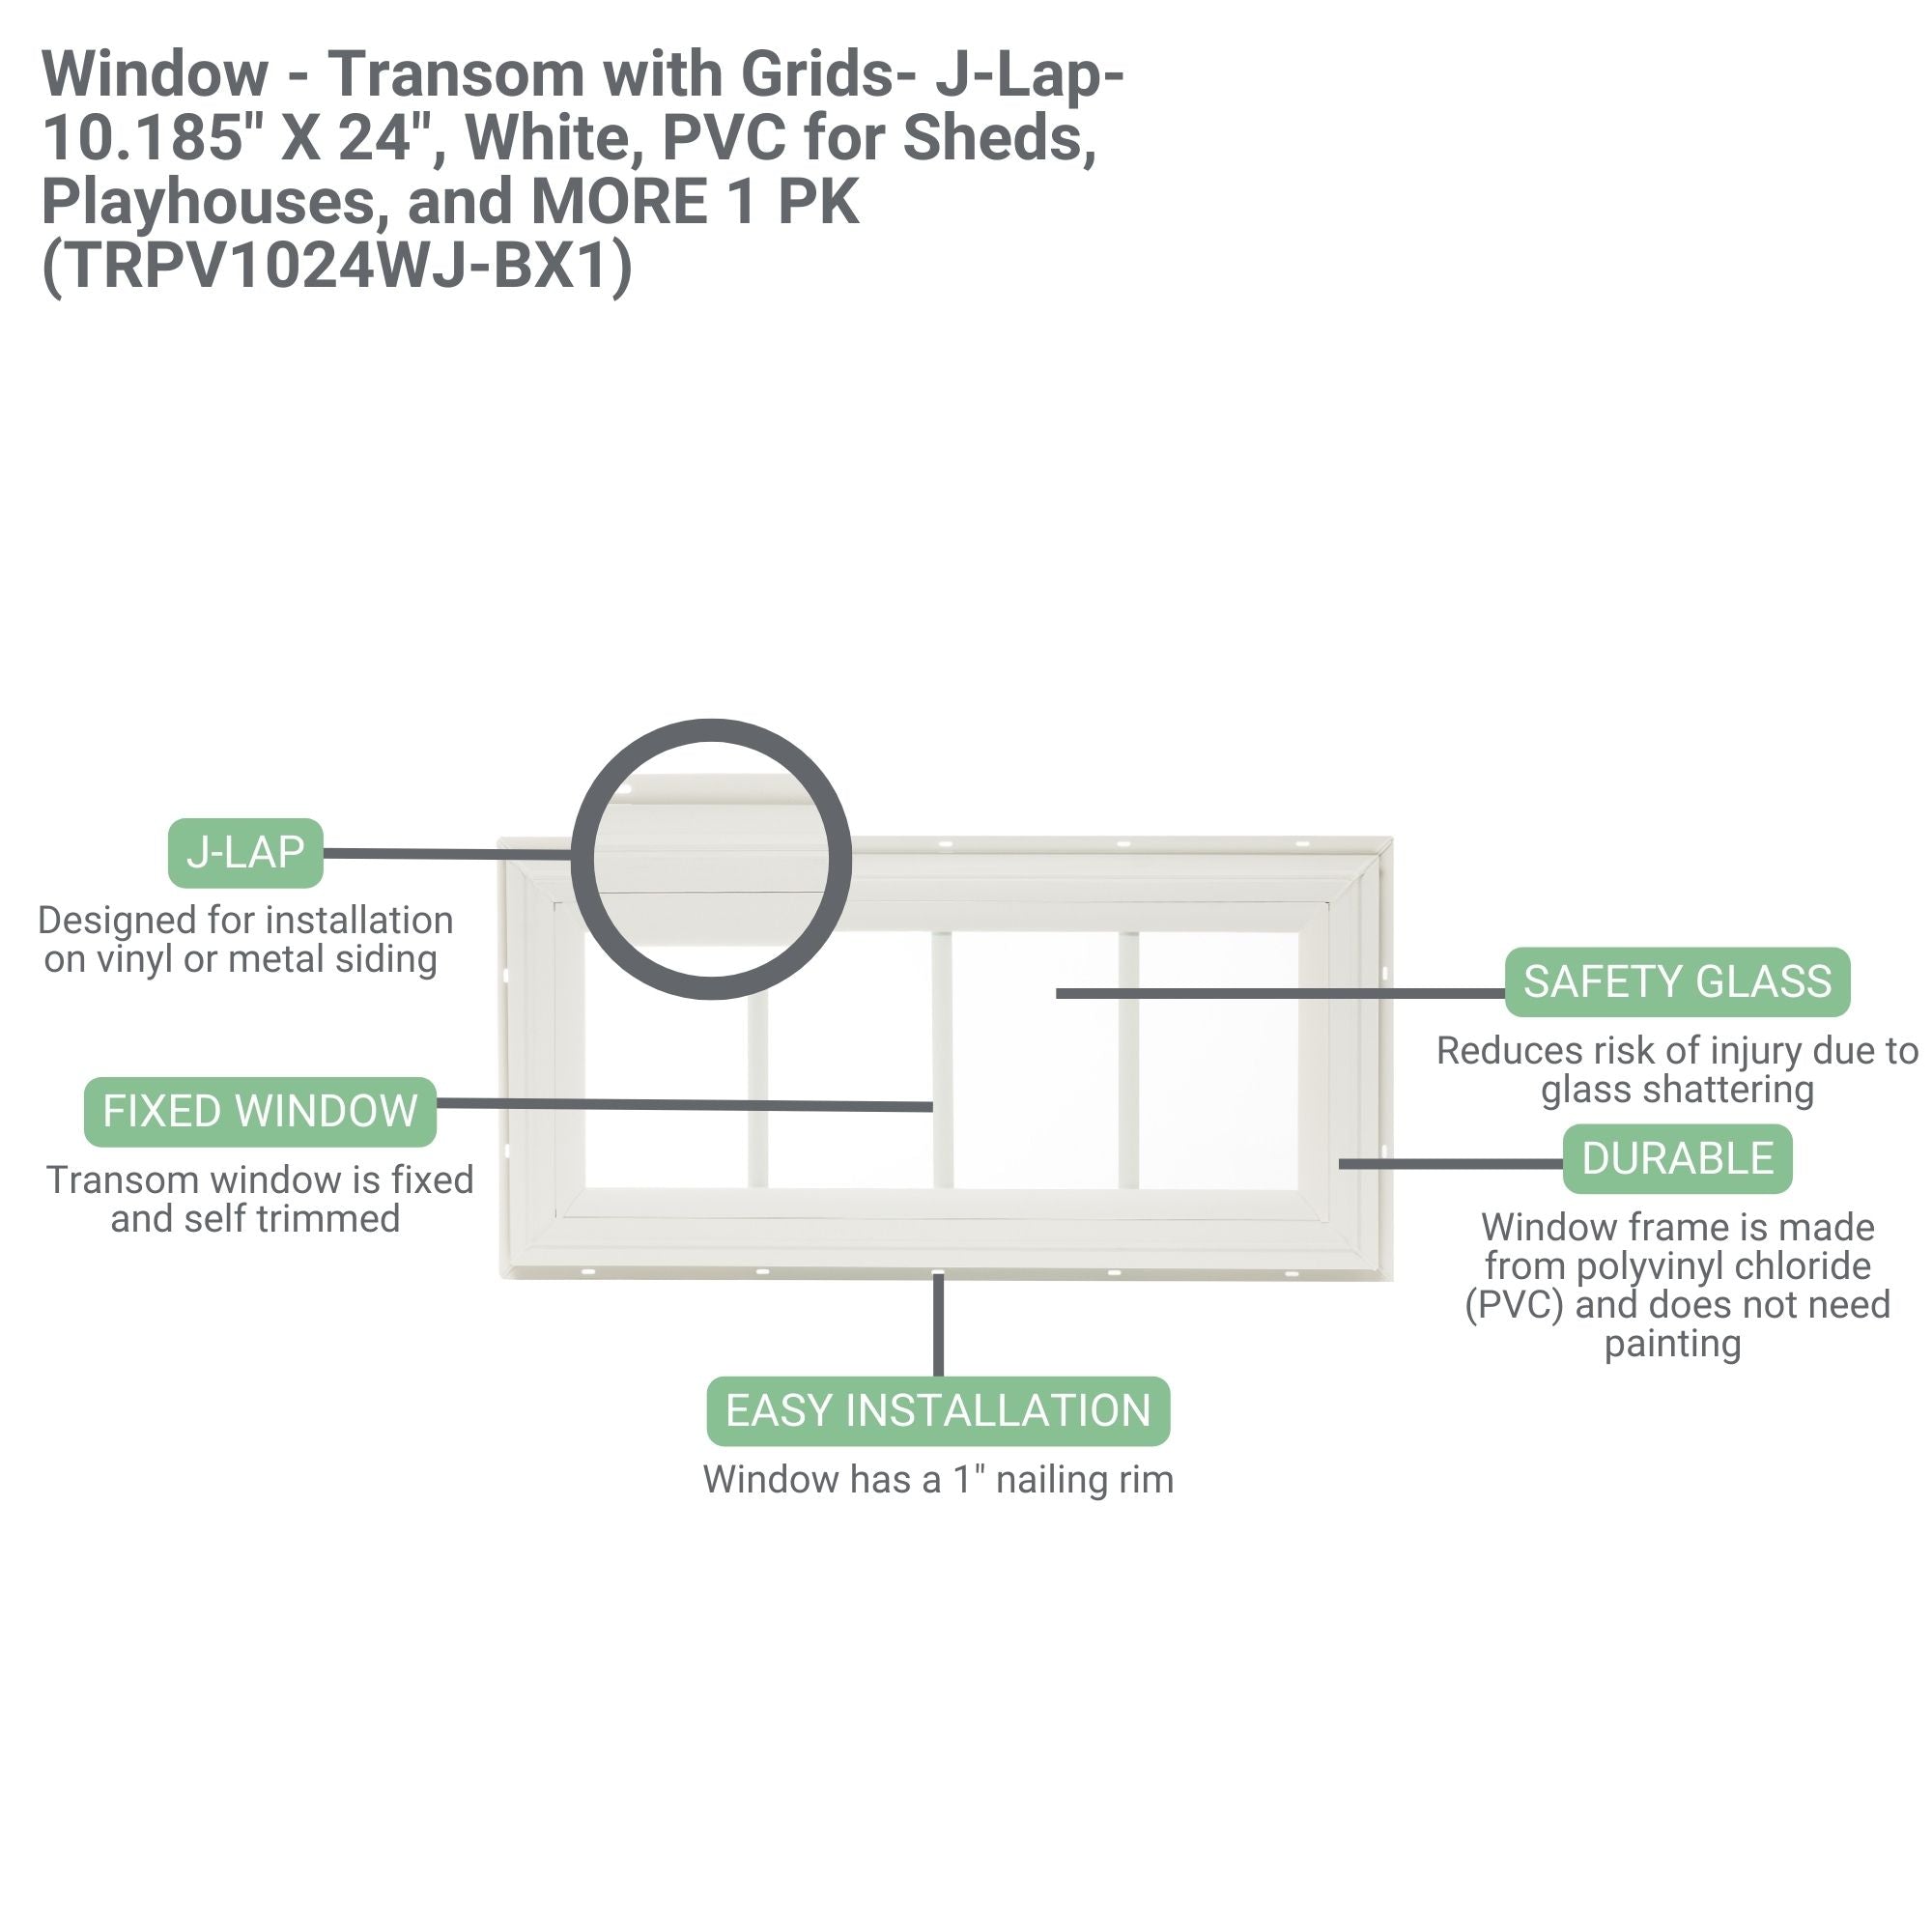 10.185" X 24" Transom J-Lap Shed Window, PVC